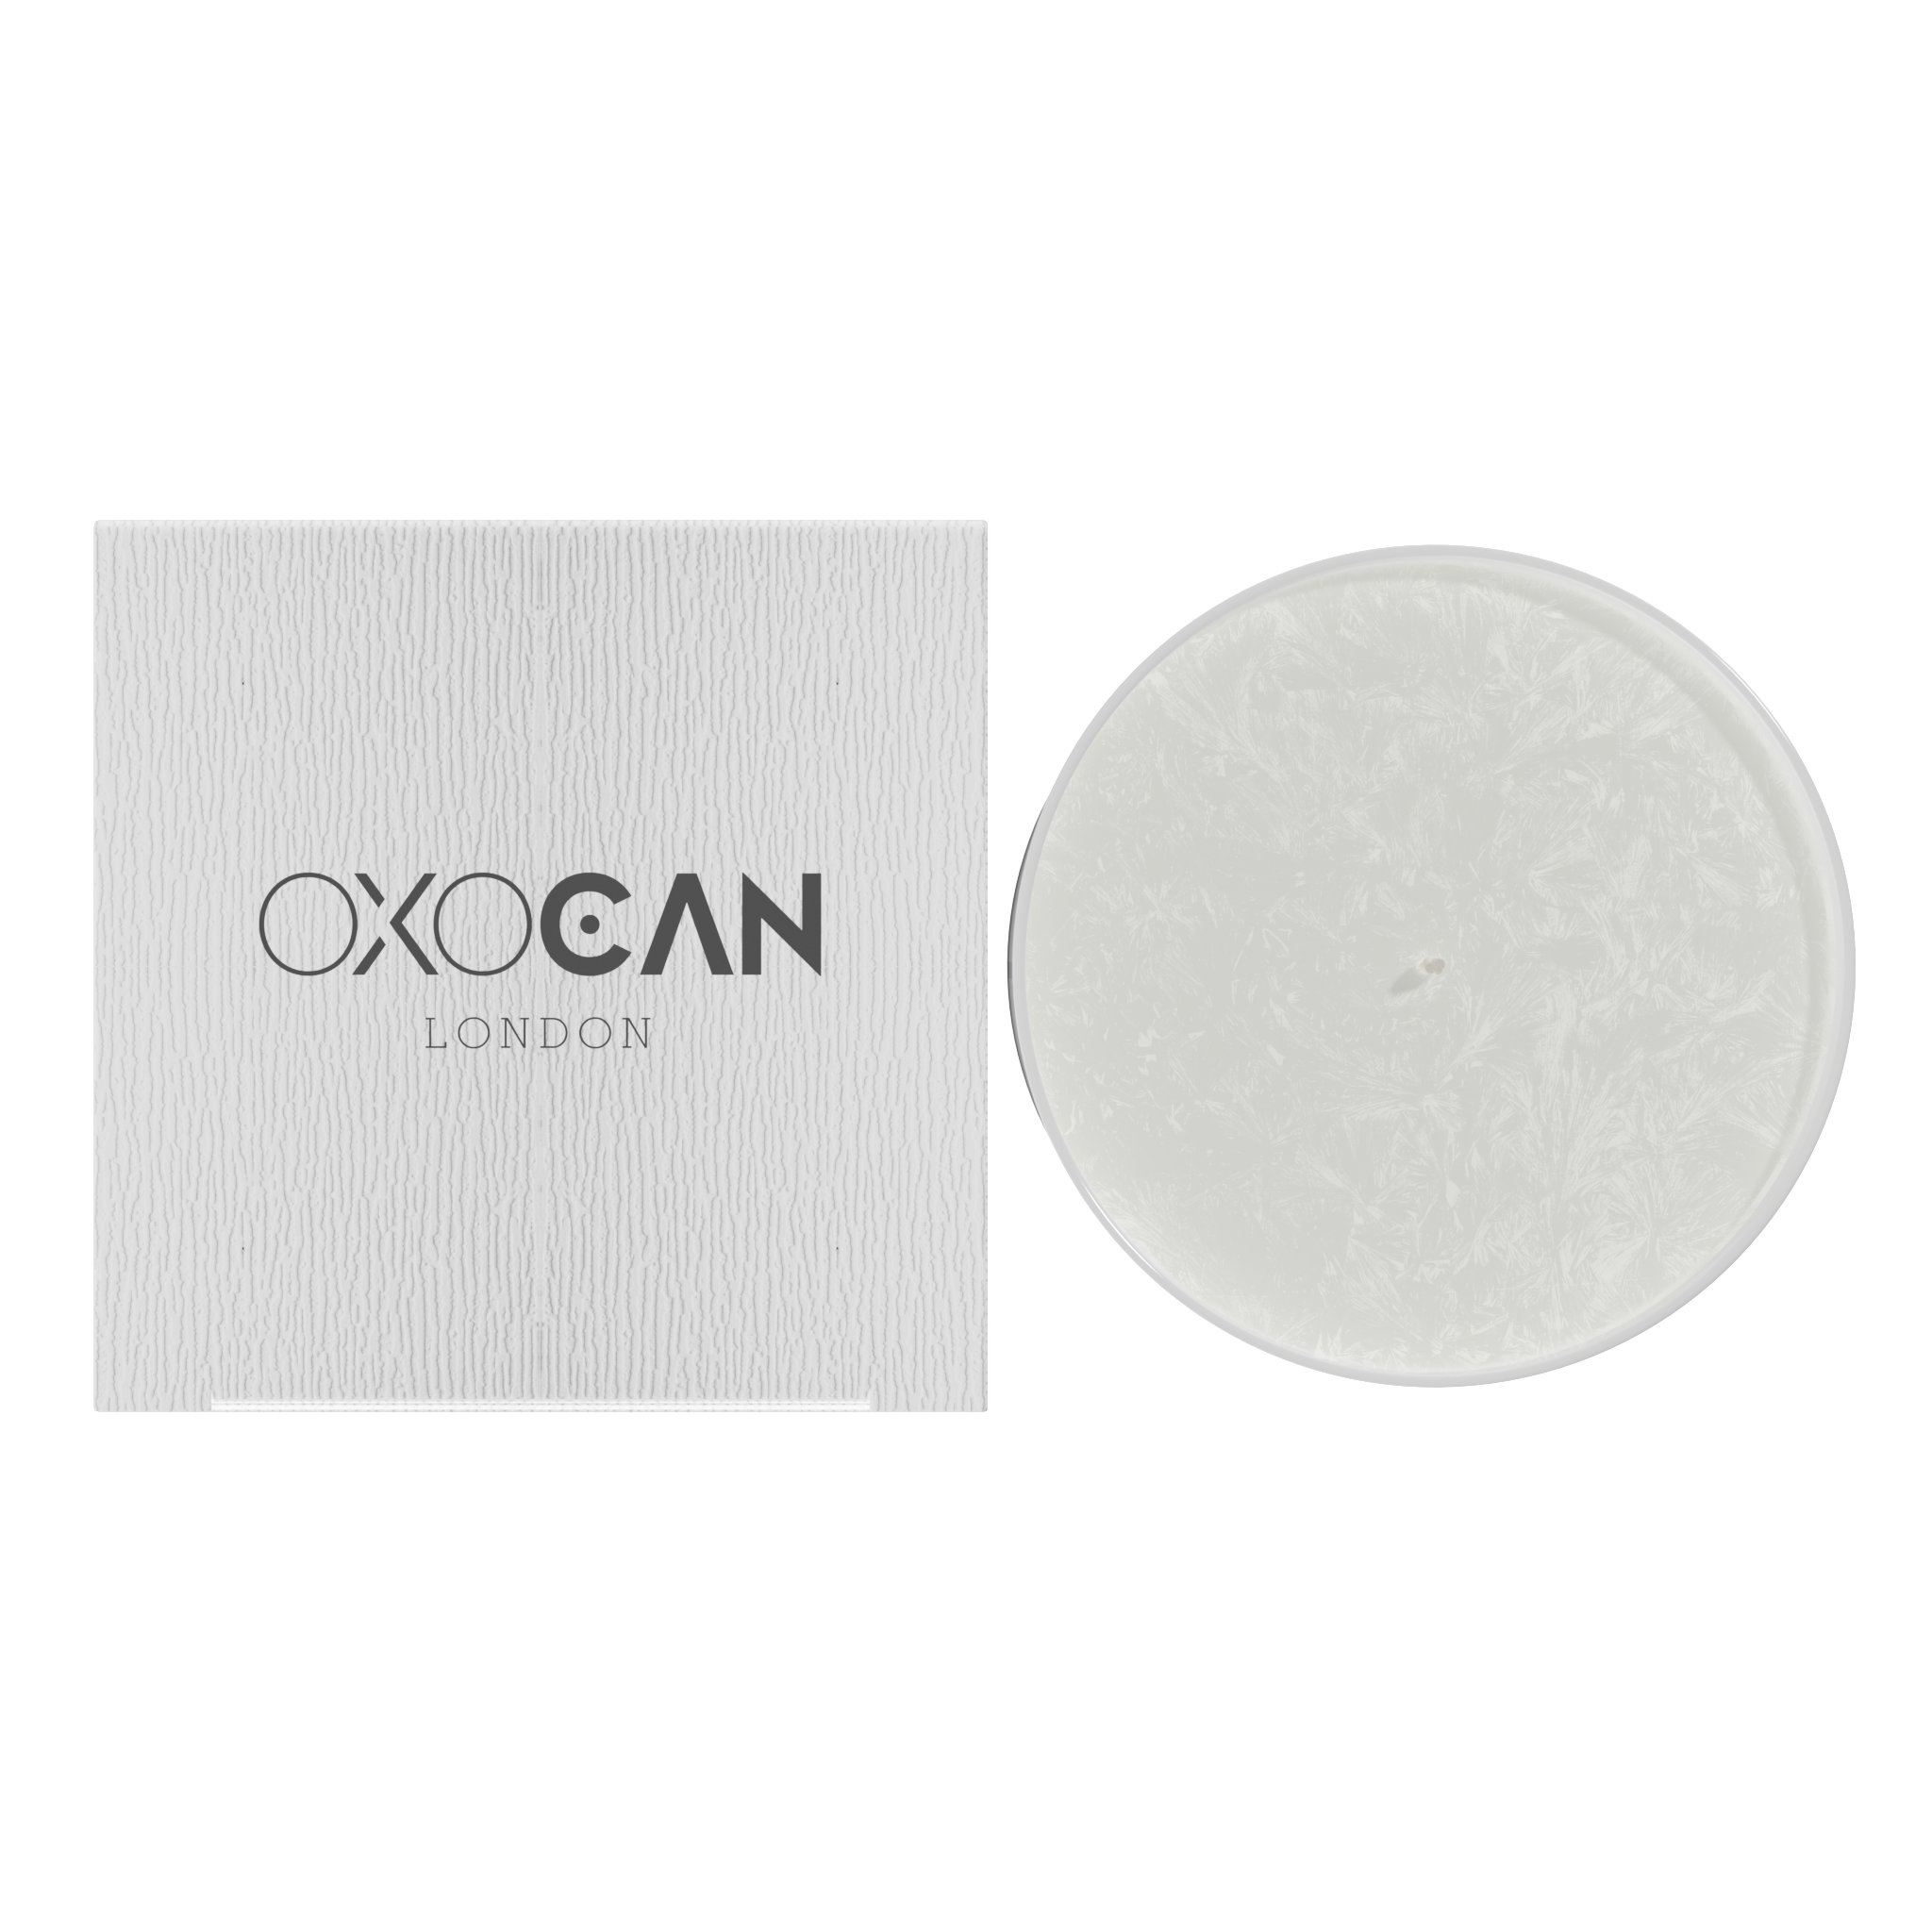 Oxocan Organic CBD Candle